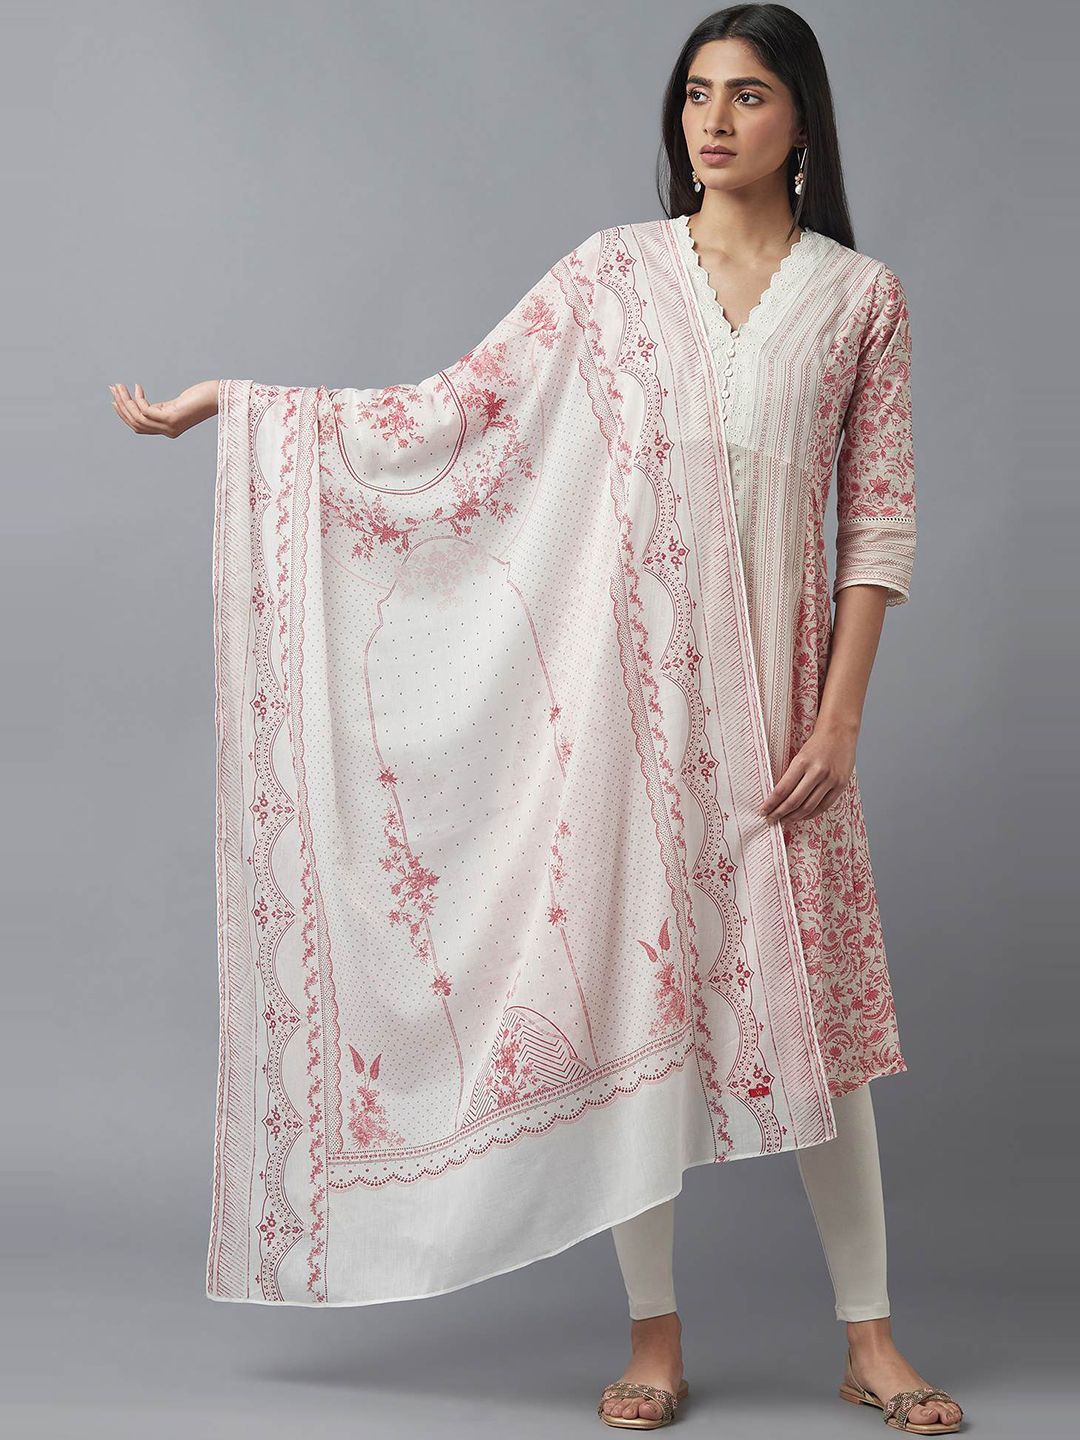 W Women White & Pink Printed Pure Cotton Dupatta Price in India